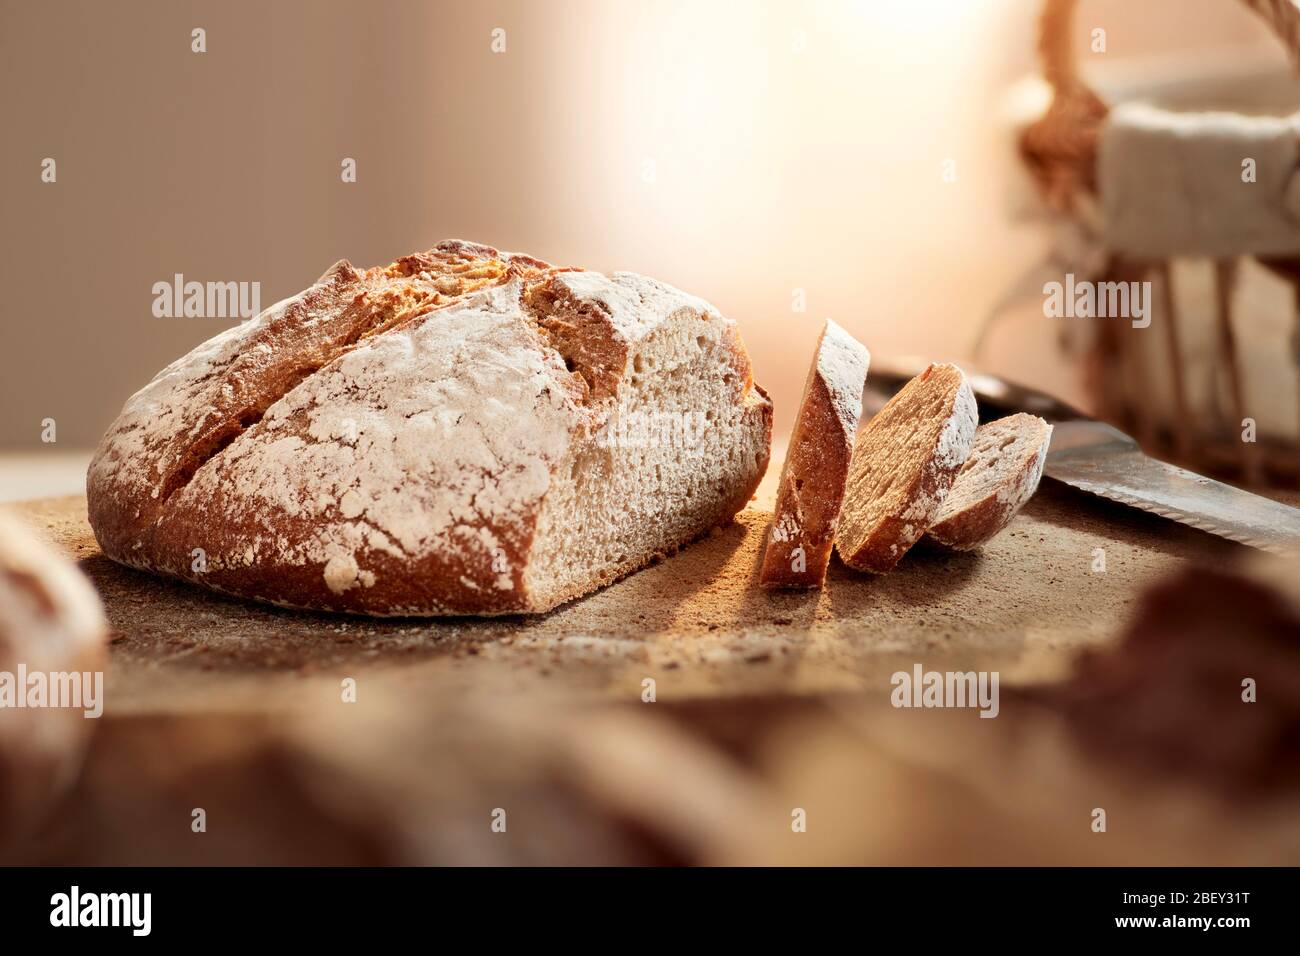 Freshly sliced bread, Germany Stock Photo